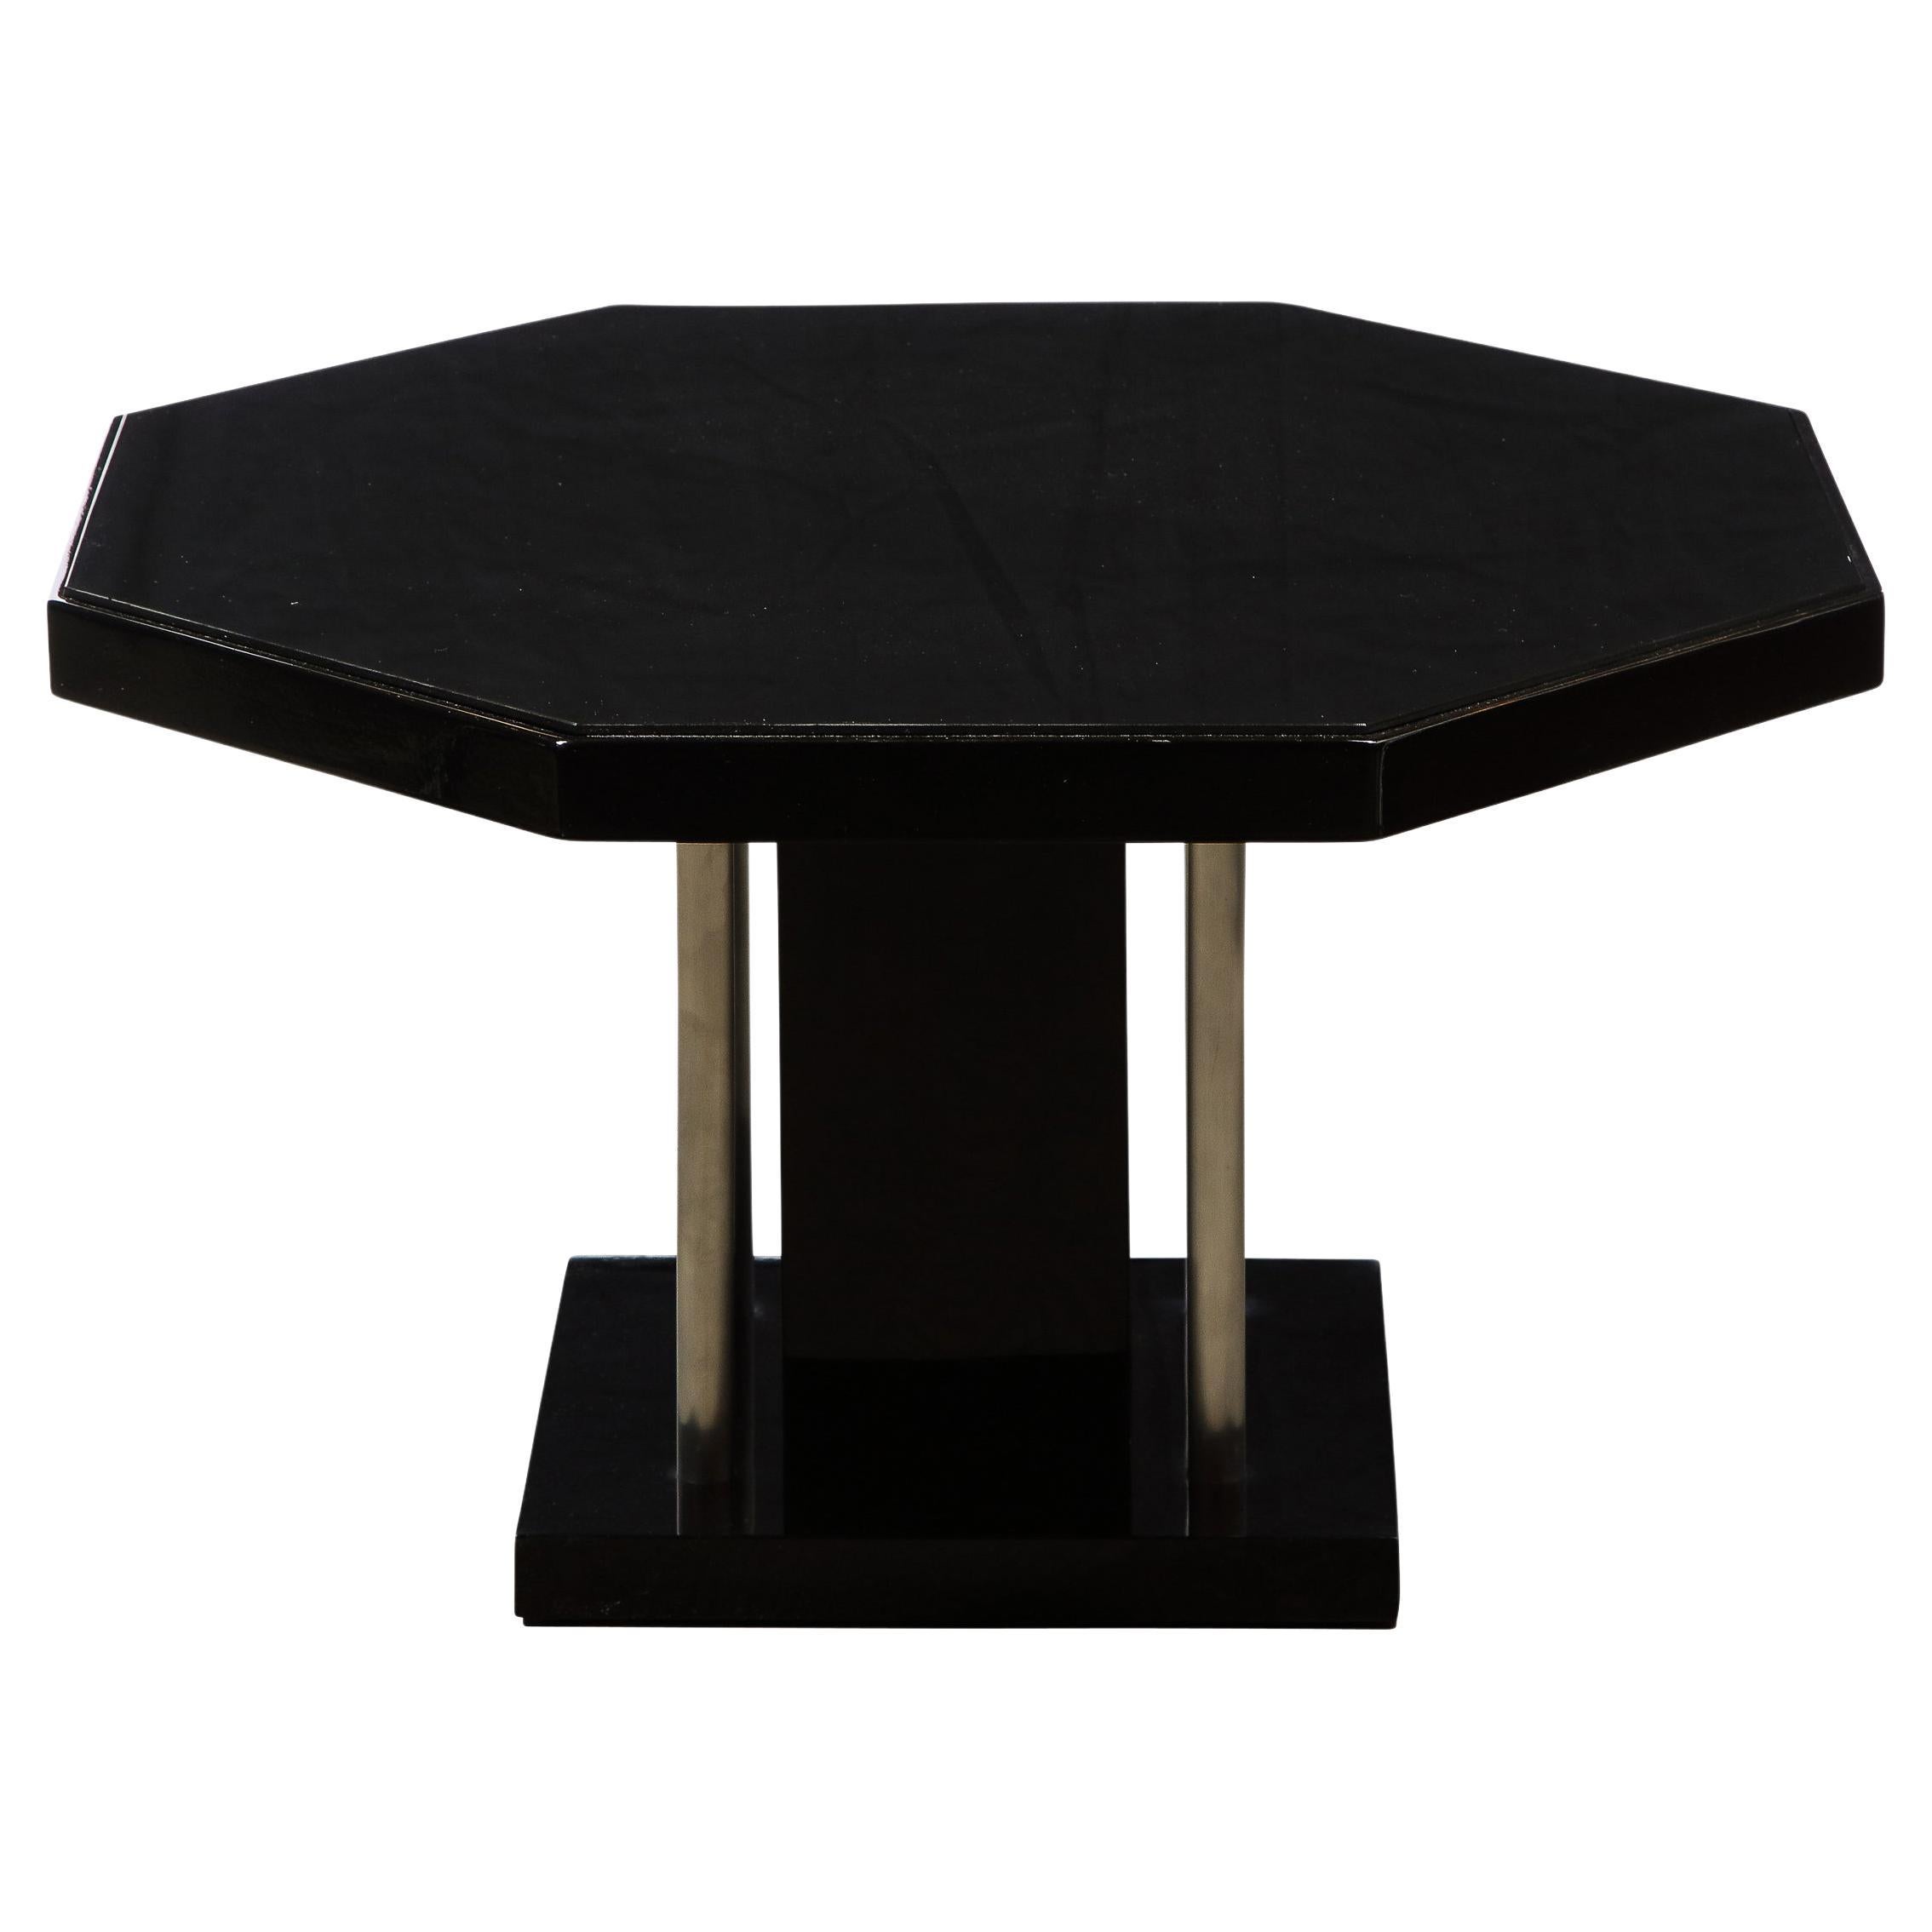 ART DECO SIDE TABLE LAMPENTISCH BEISTELLTISCH COCKTAIL TABLE BLACK LEG TABLE 